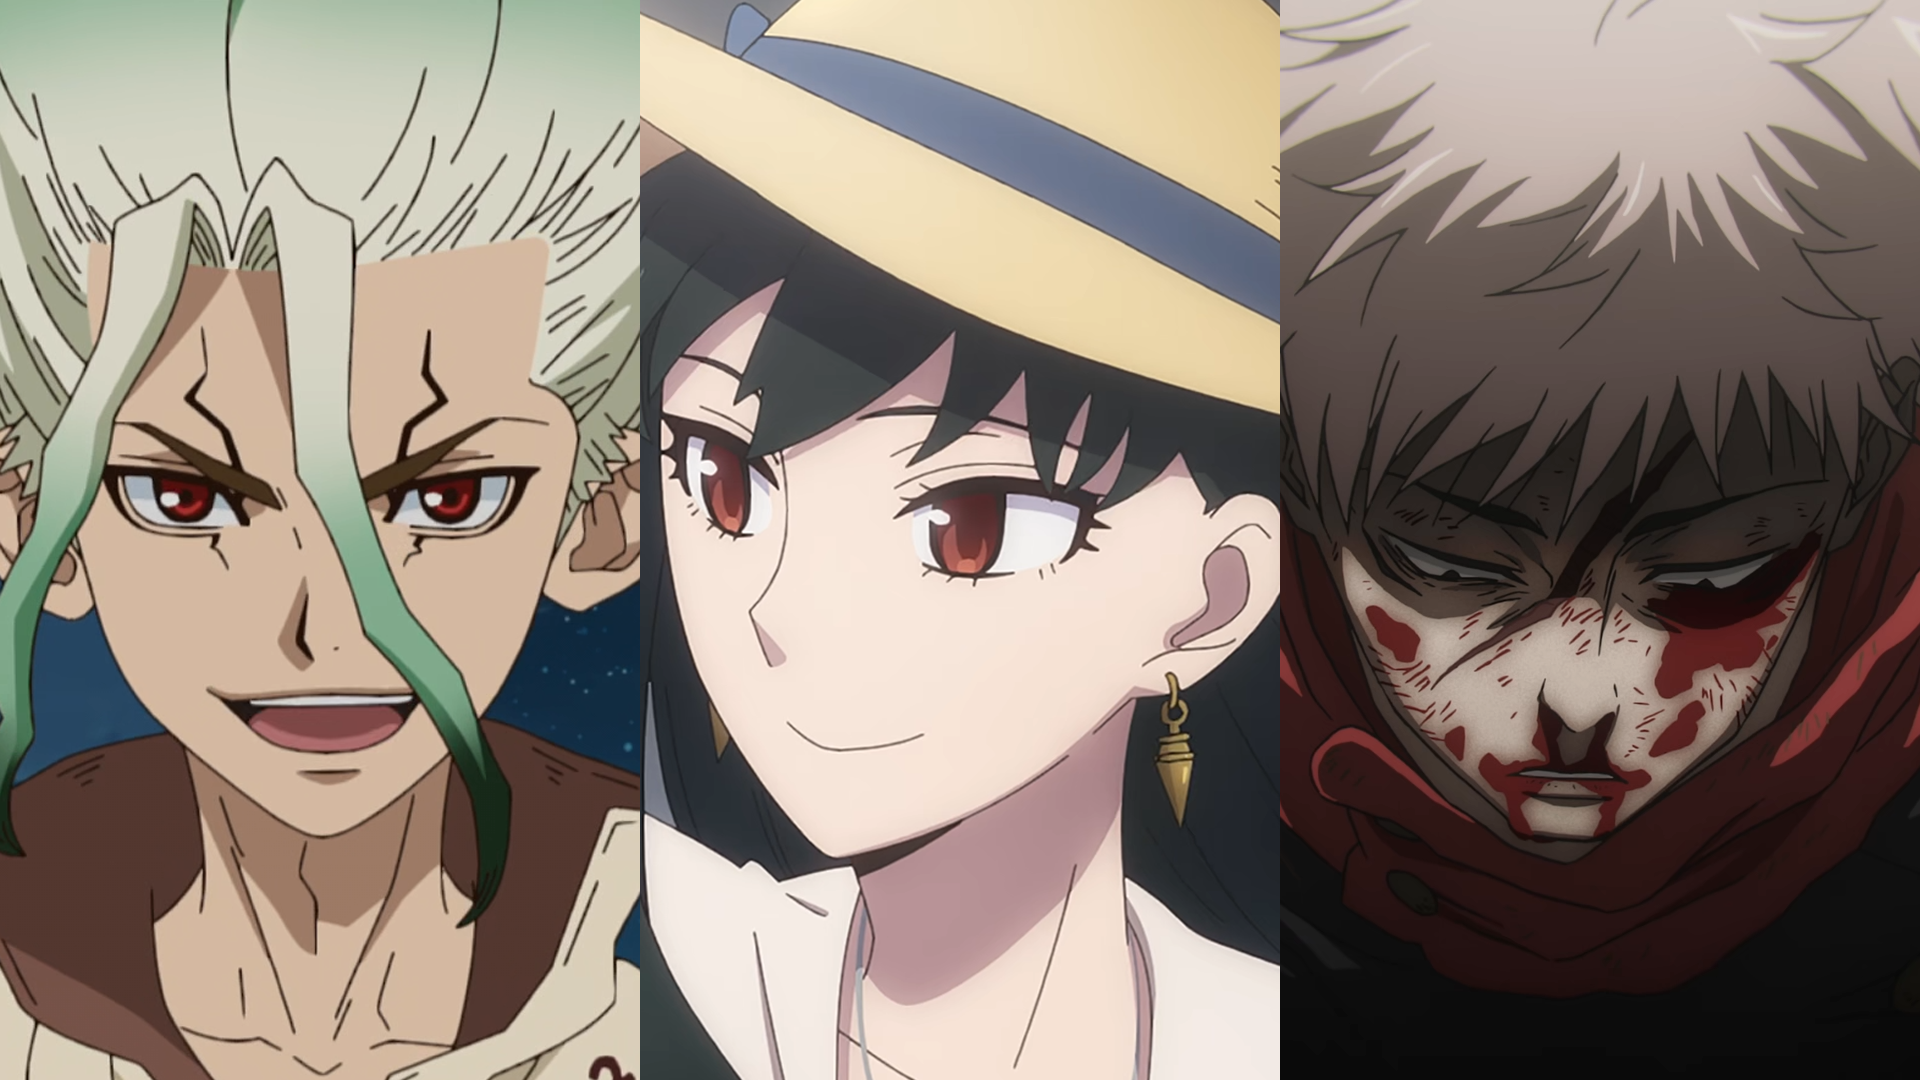 Anime Corner - Top 10 Anime of the Week 10